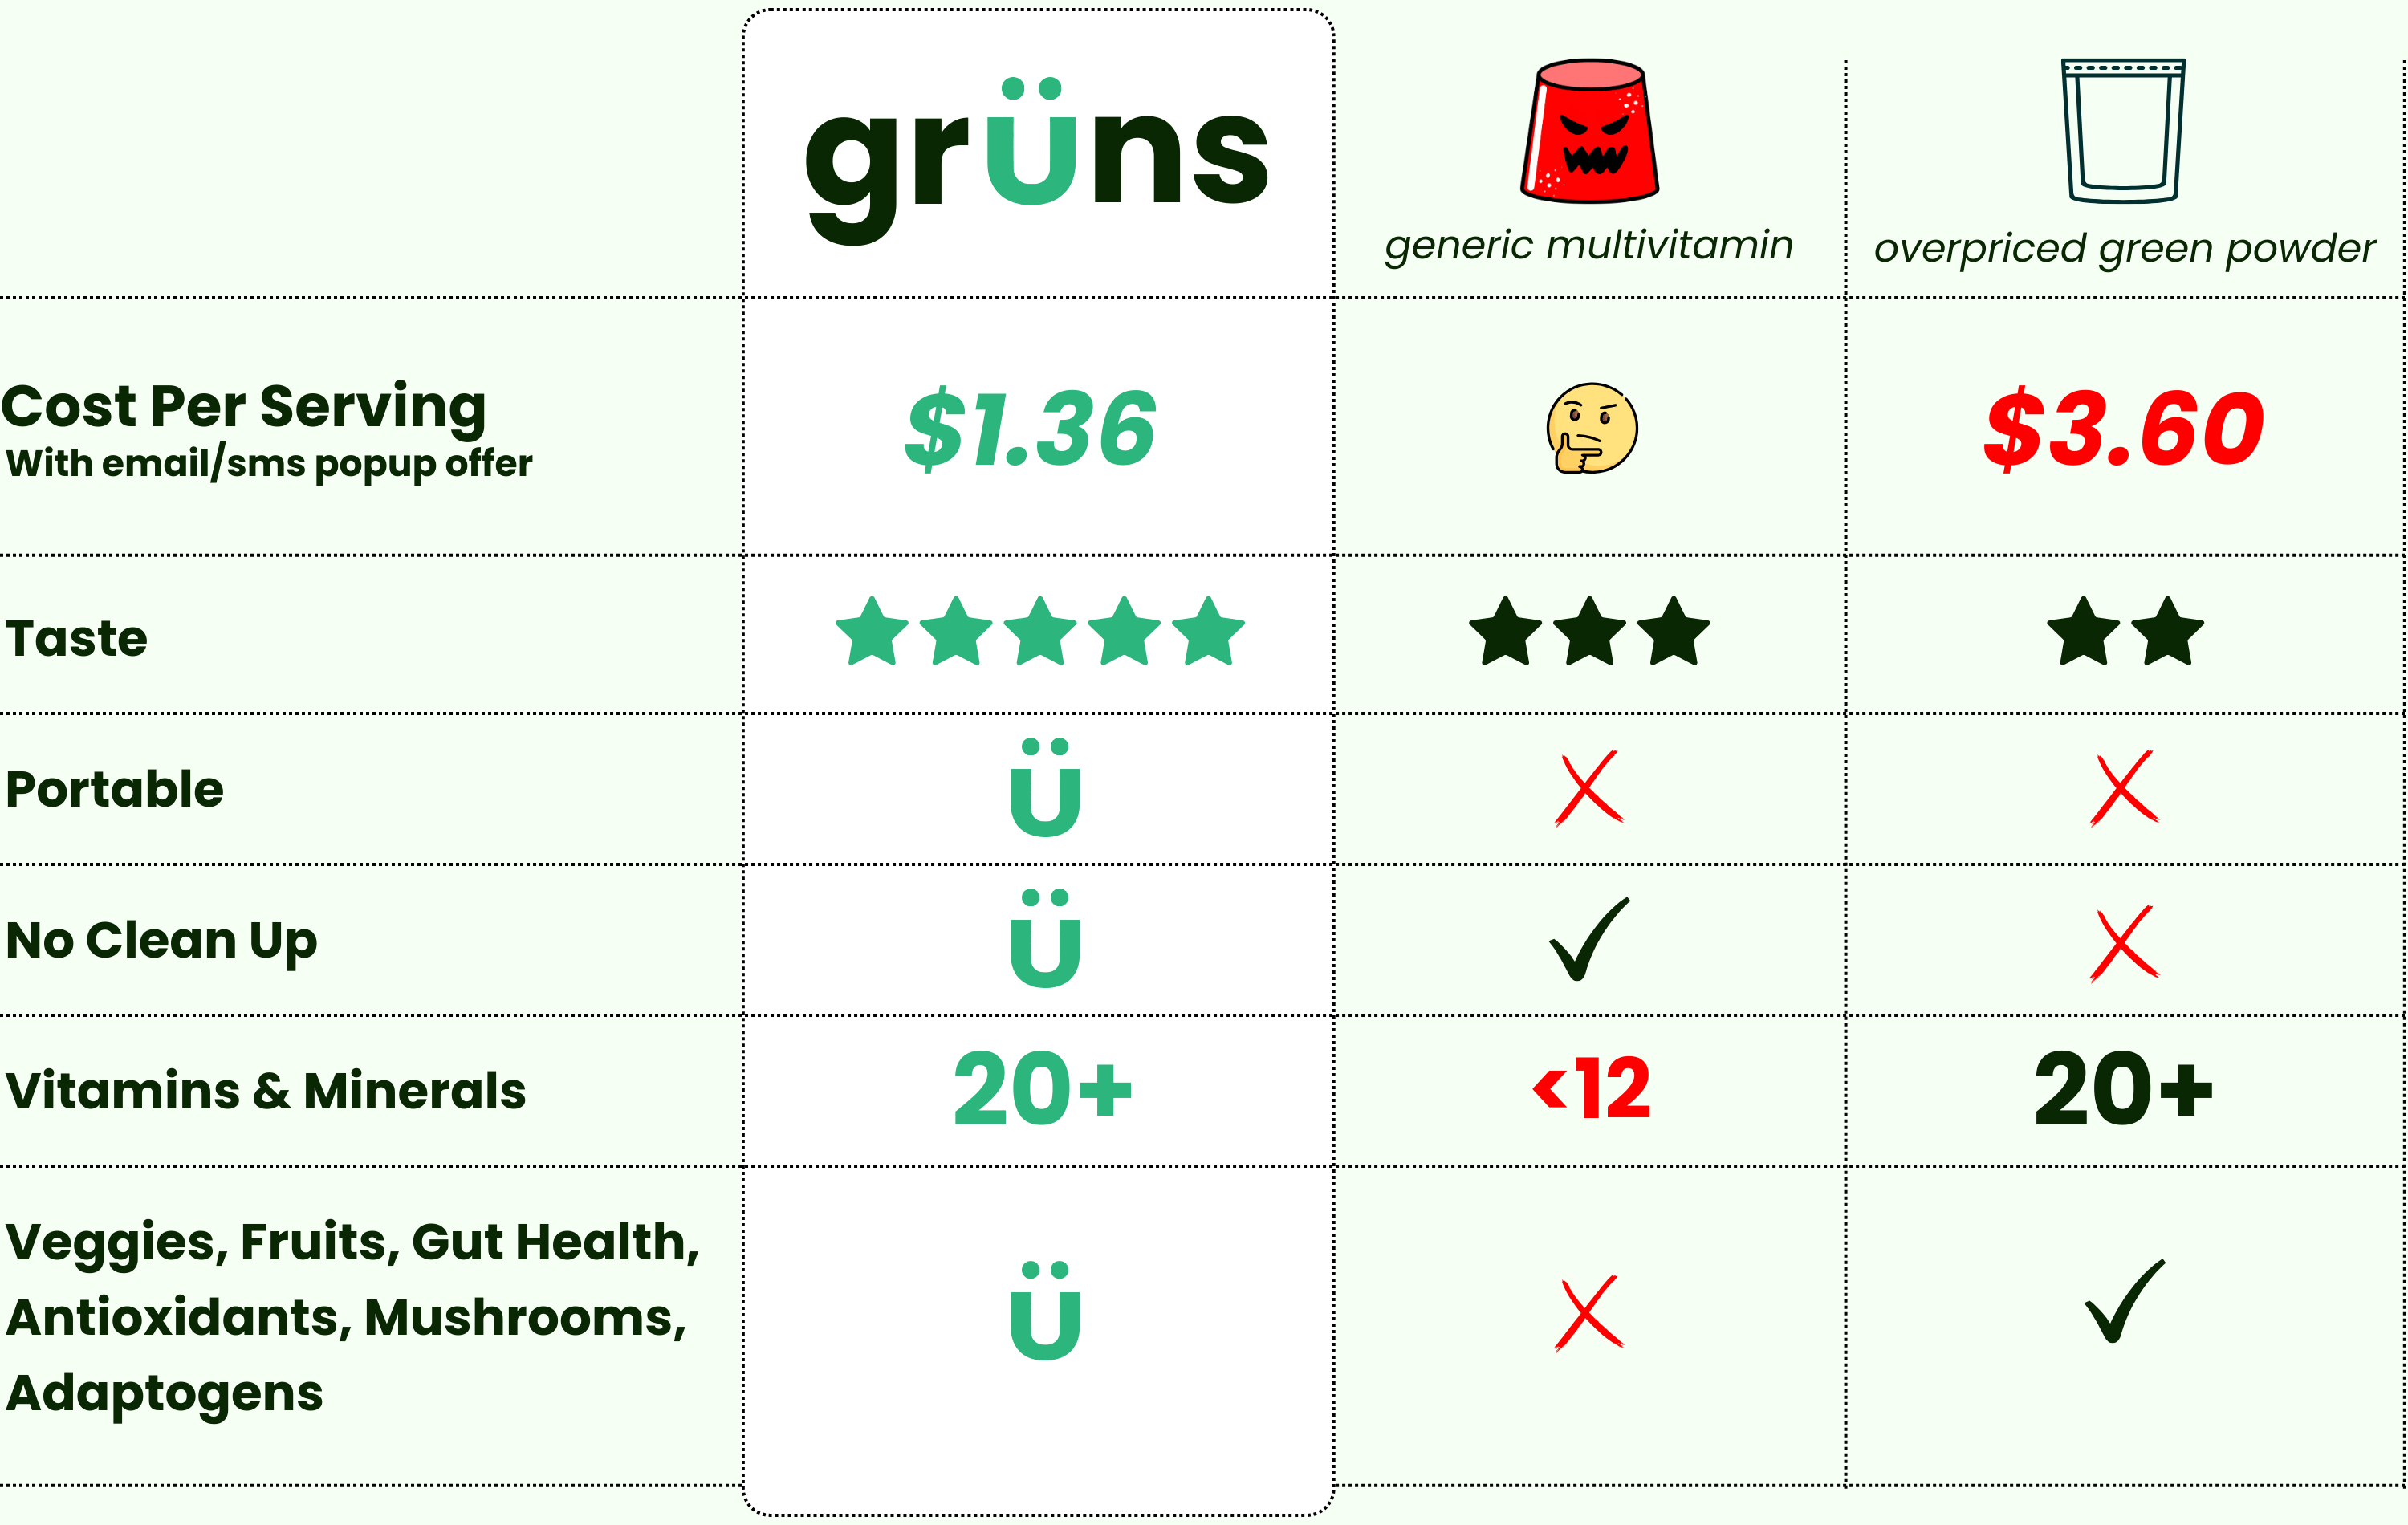 Grüns Comparison to Multivitamin and Green Powder